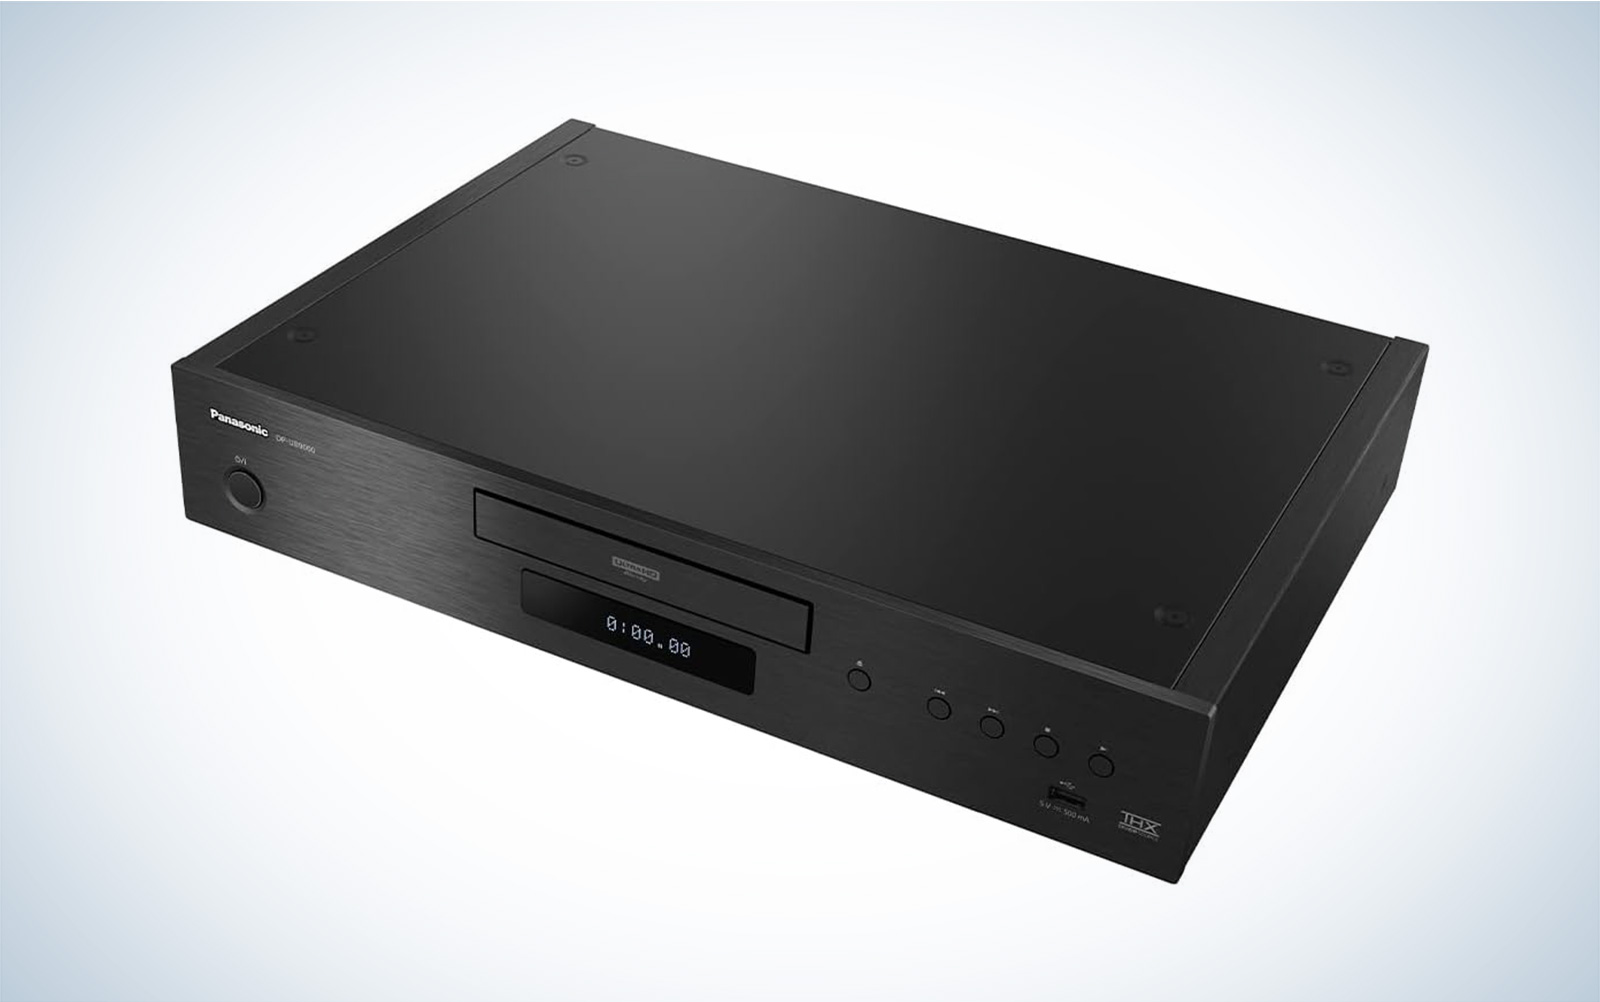 Panasonic DP-UB9000 Blu-ray player